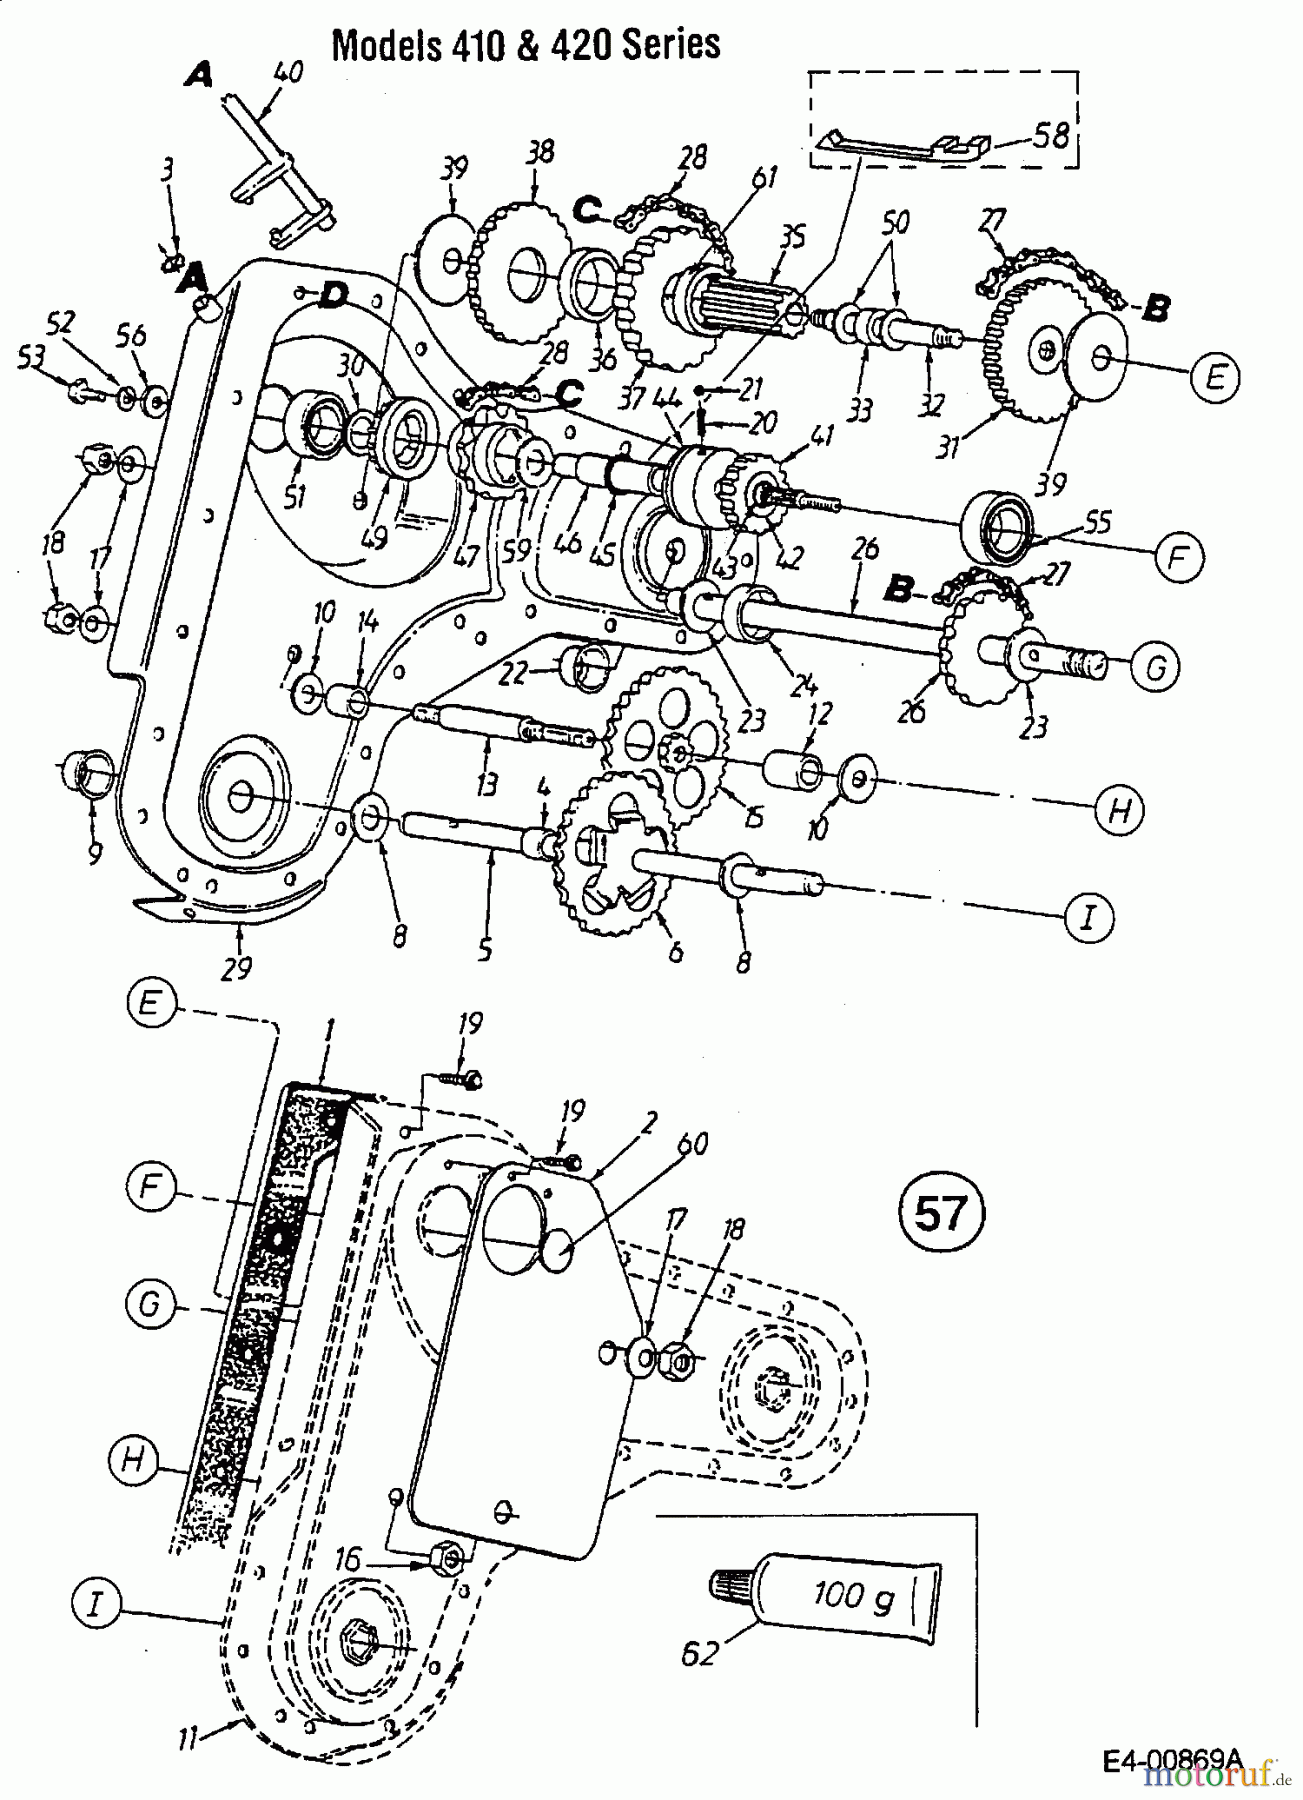  Mastercut Motorhacken T/410 21A-411A659  (2001) Getriebe